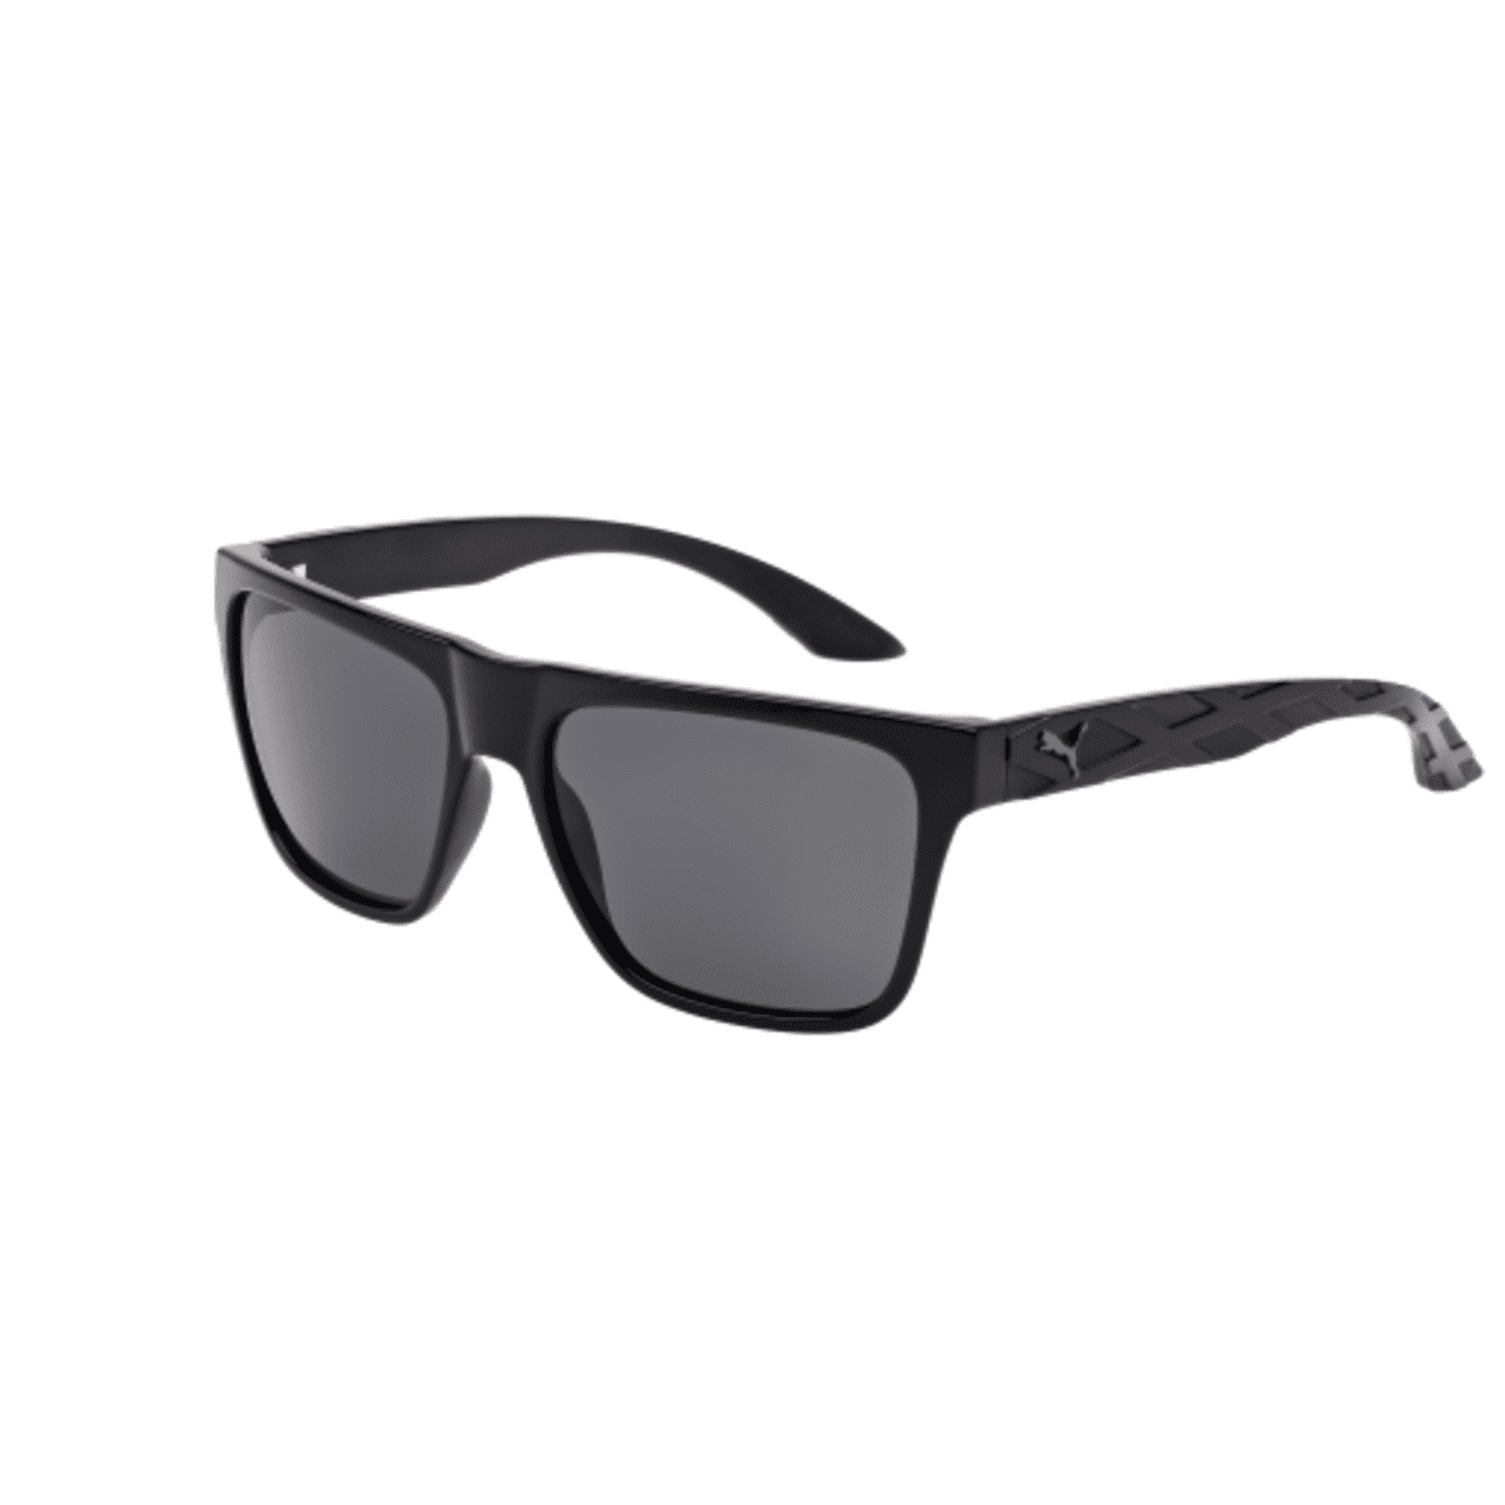 PUMA - Sunglasses Puma PU 0008 S- 002 BLACK / GREY - Walmart.com ...